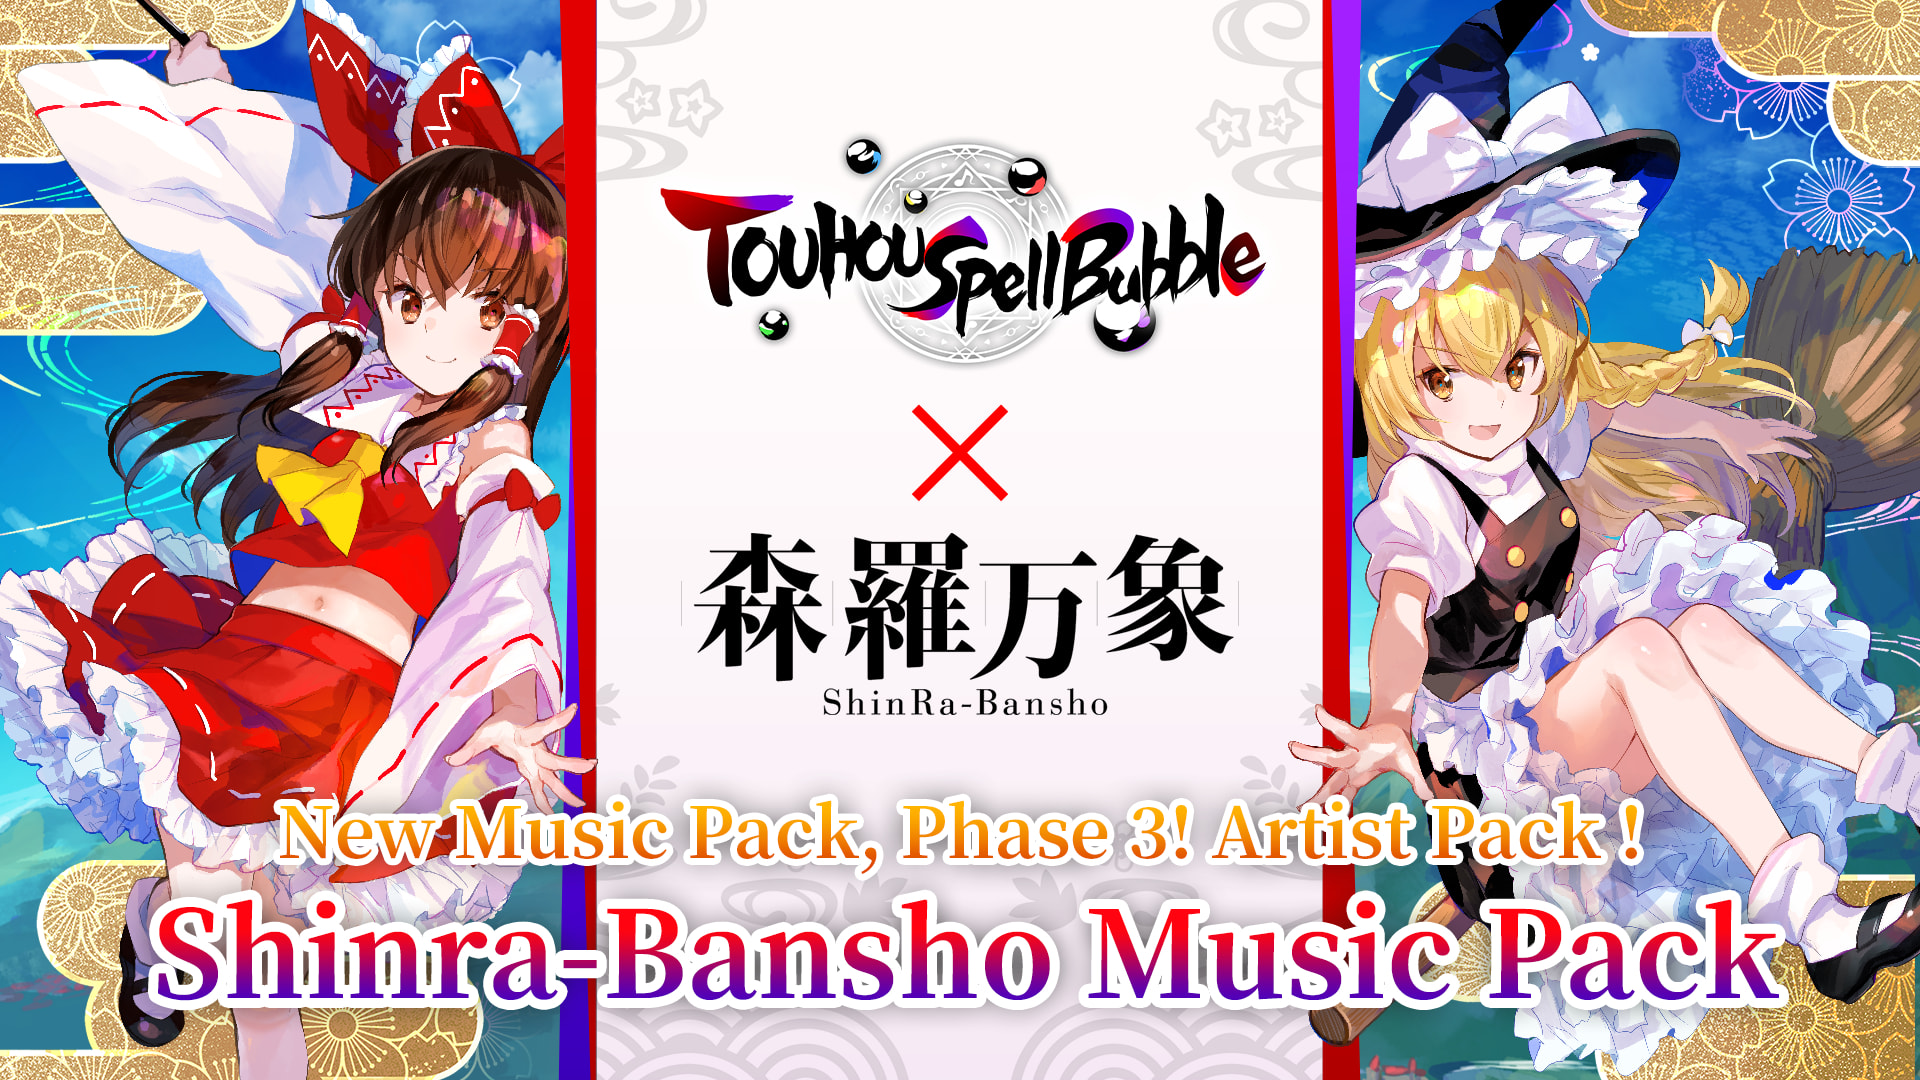 Shinra-Bansho Music Pack